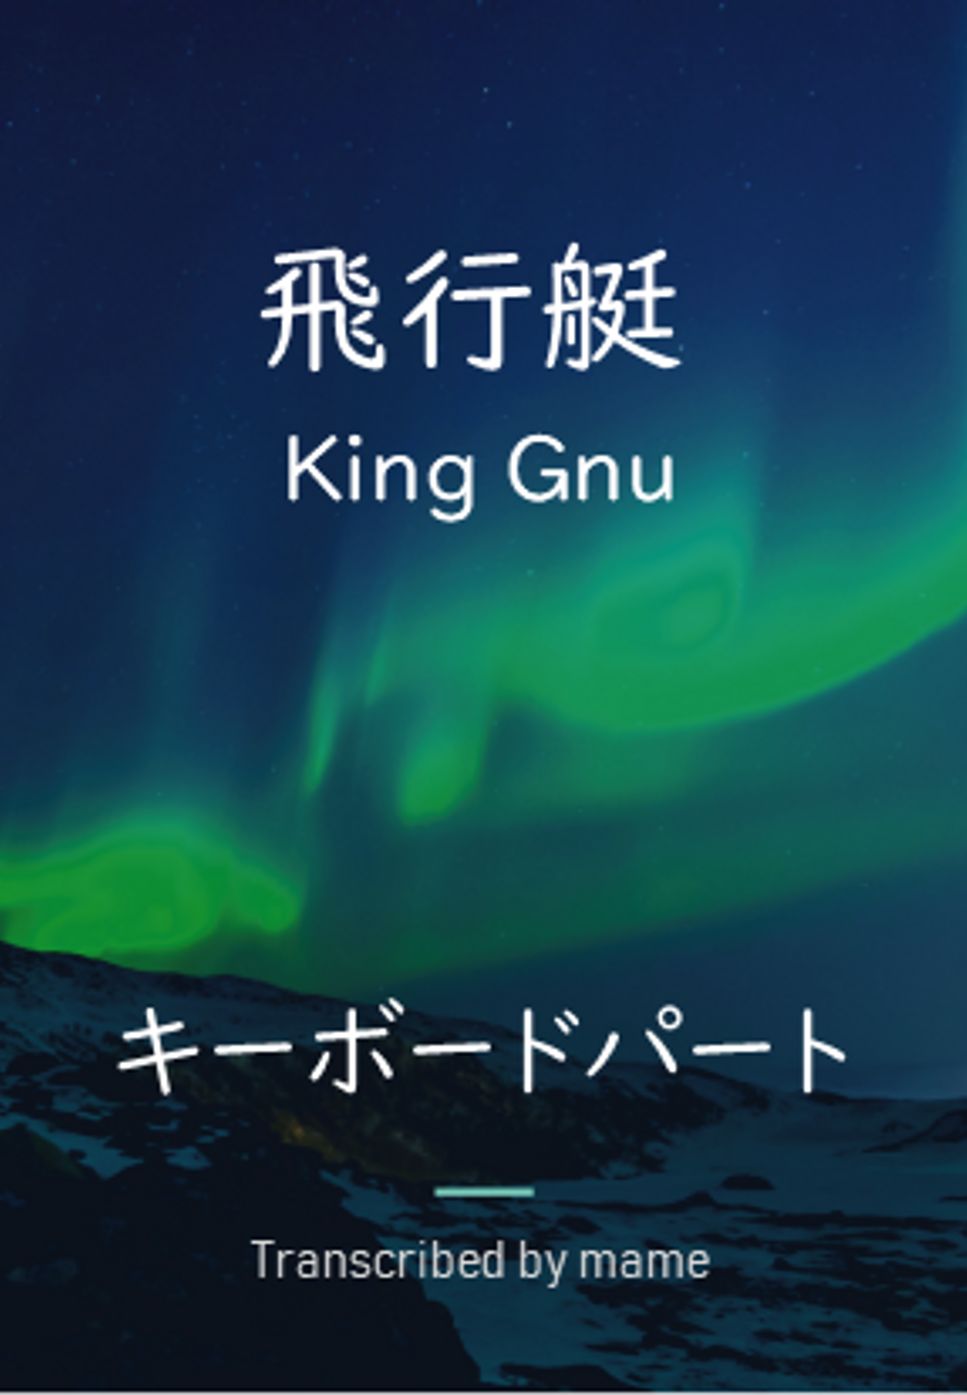 King Gnu - 飛行艇 (キーボードパート) by mame